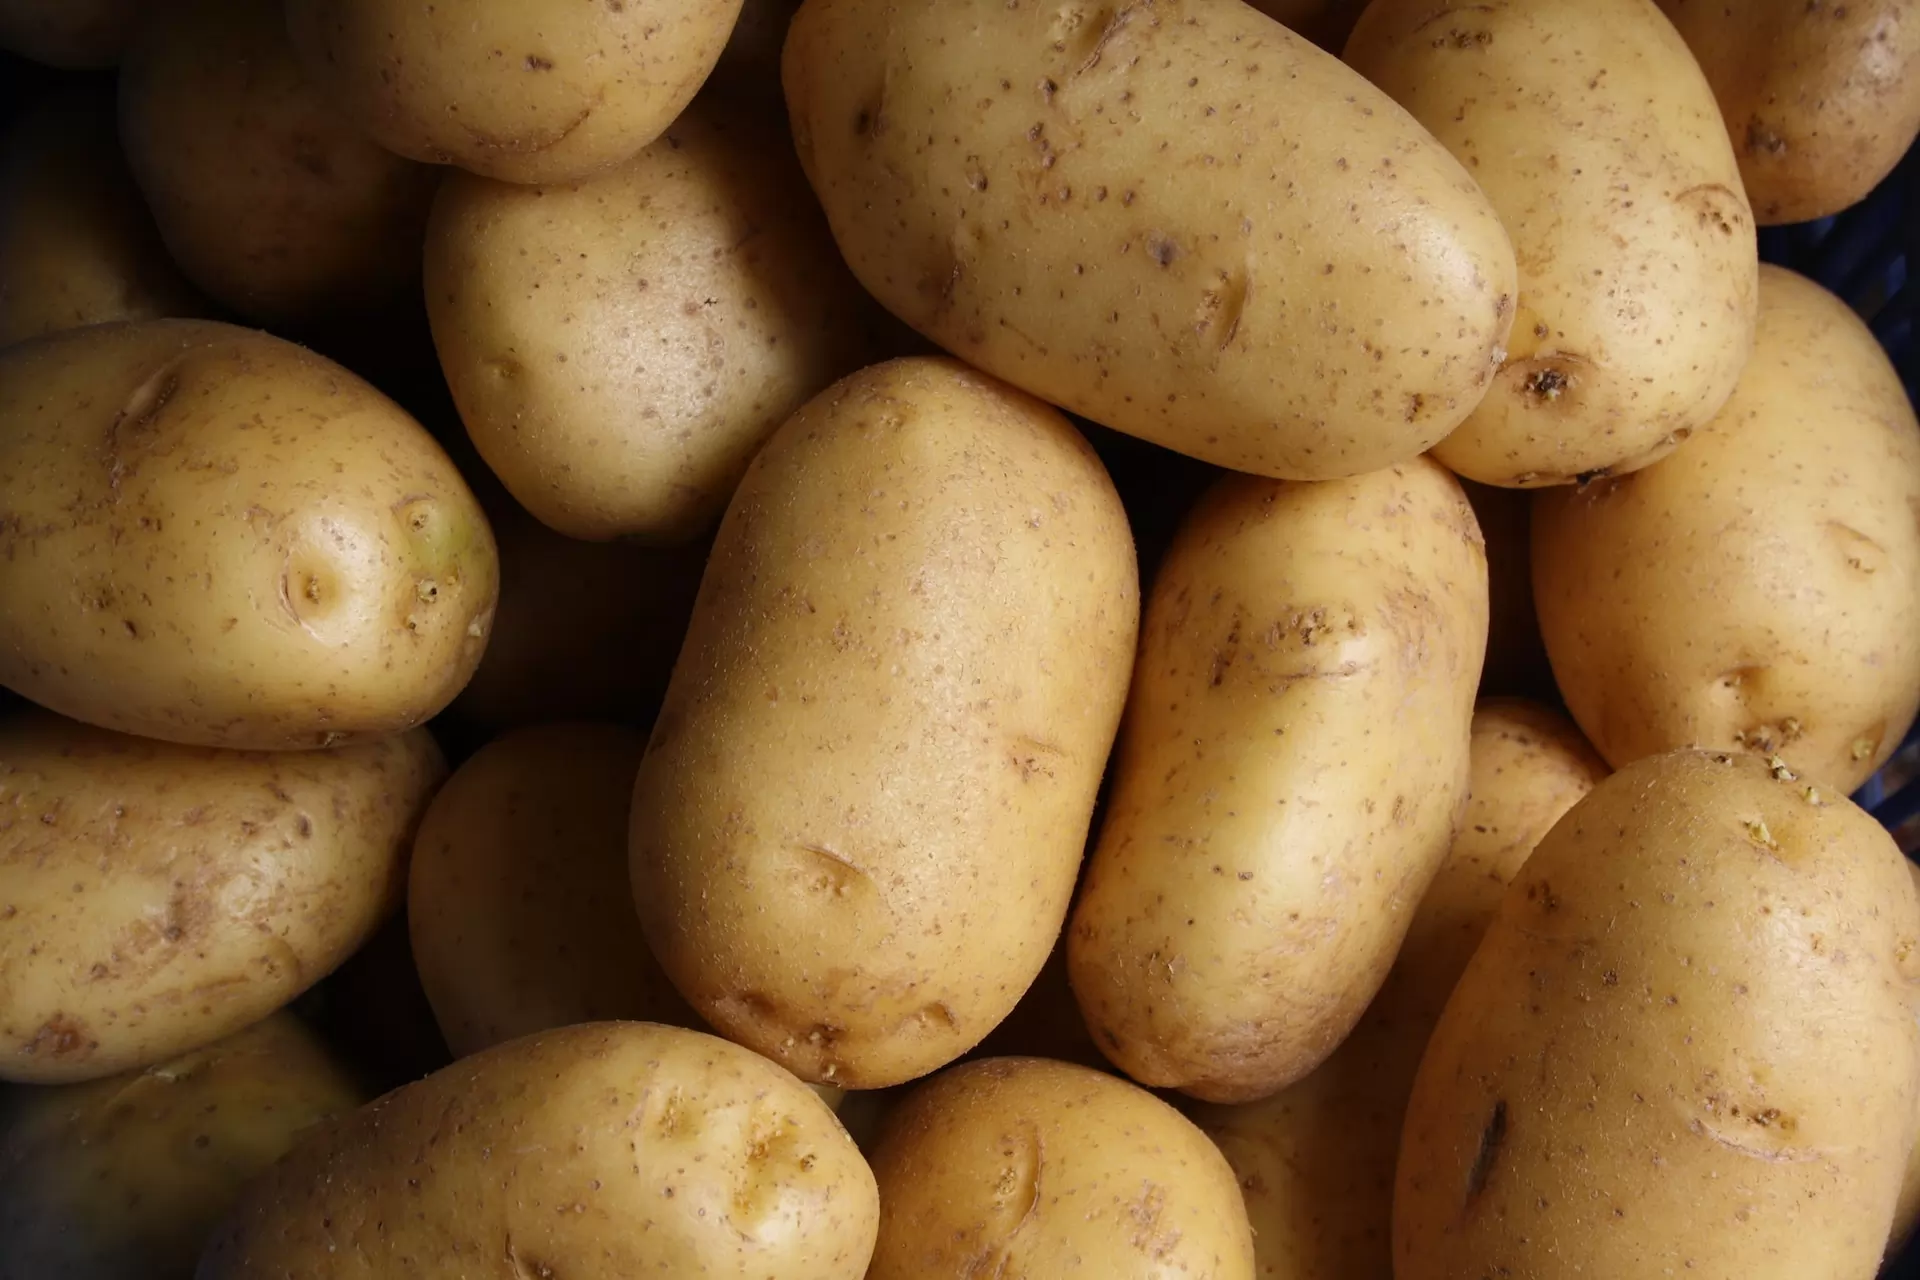 The potato market